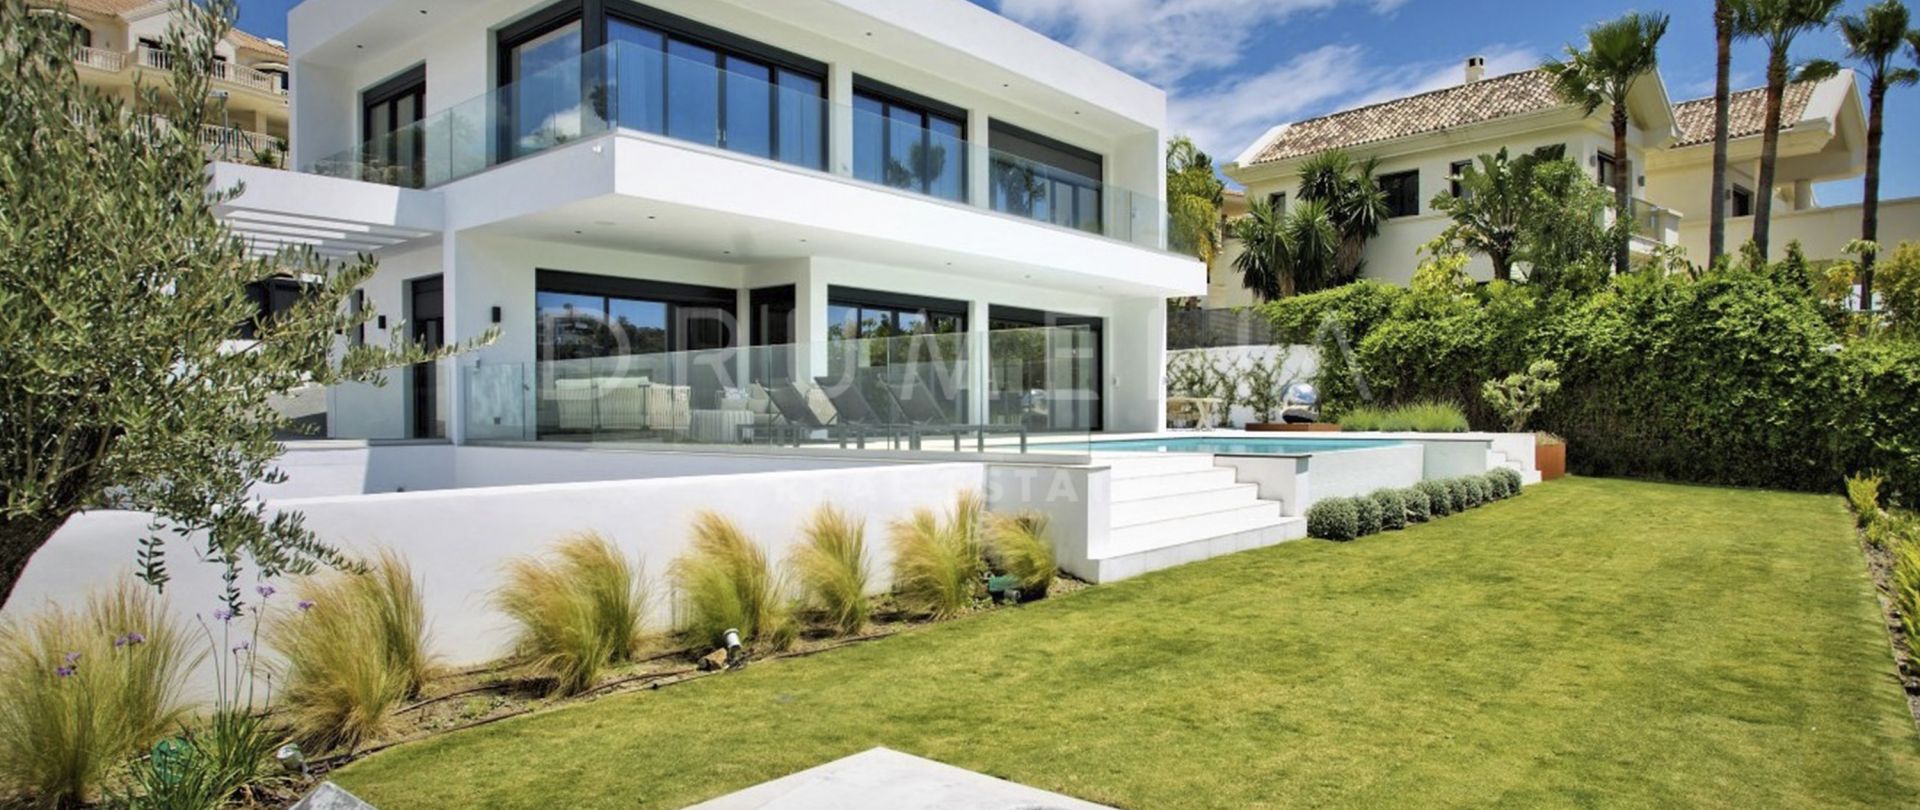 New Frontline Golf Stylish Modern Luxury House in La Alqueria, Benahavis